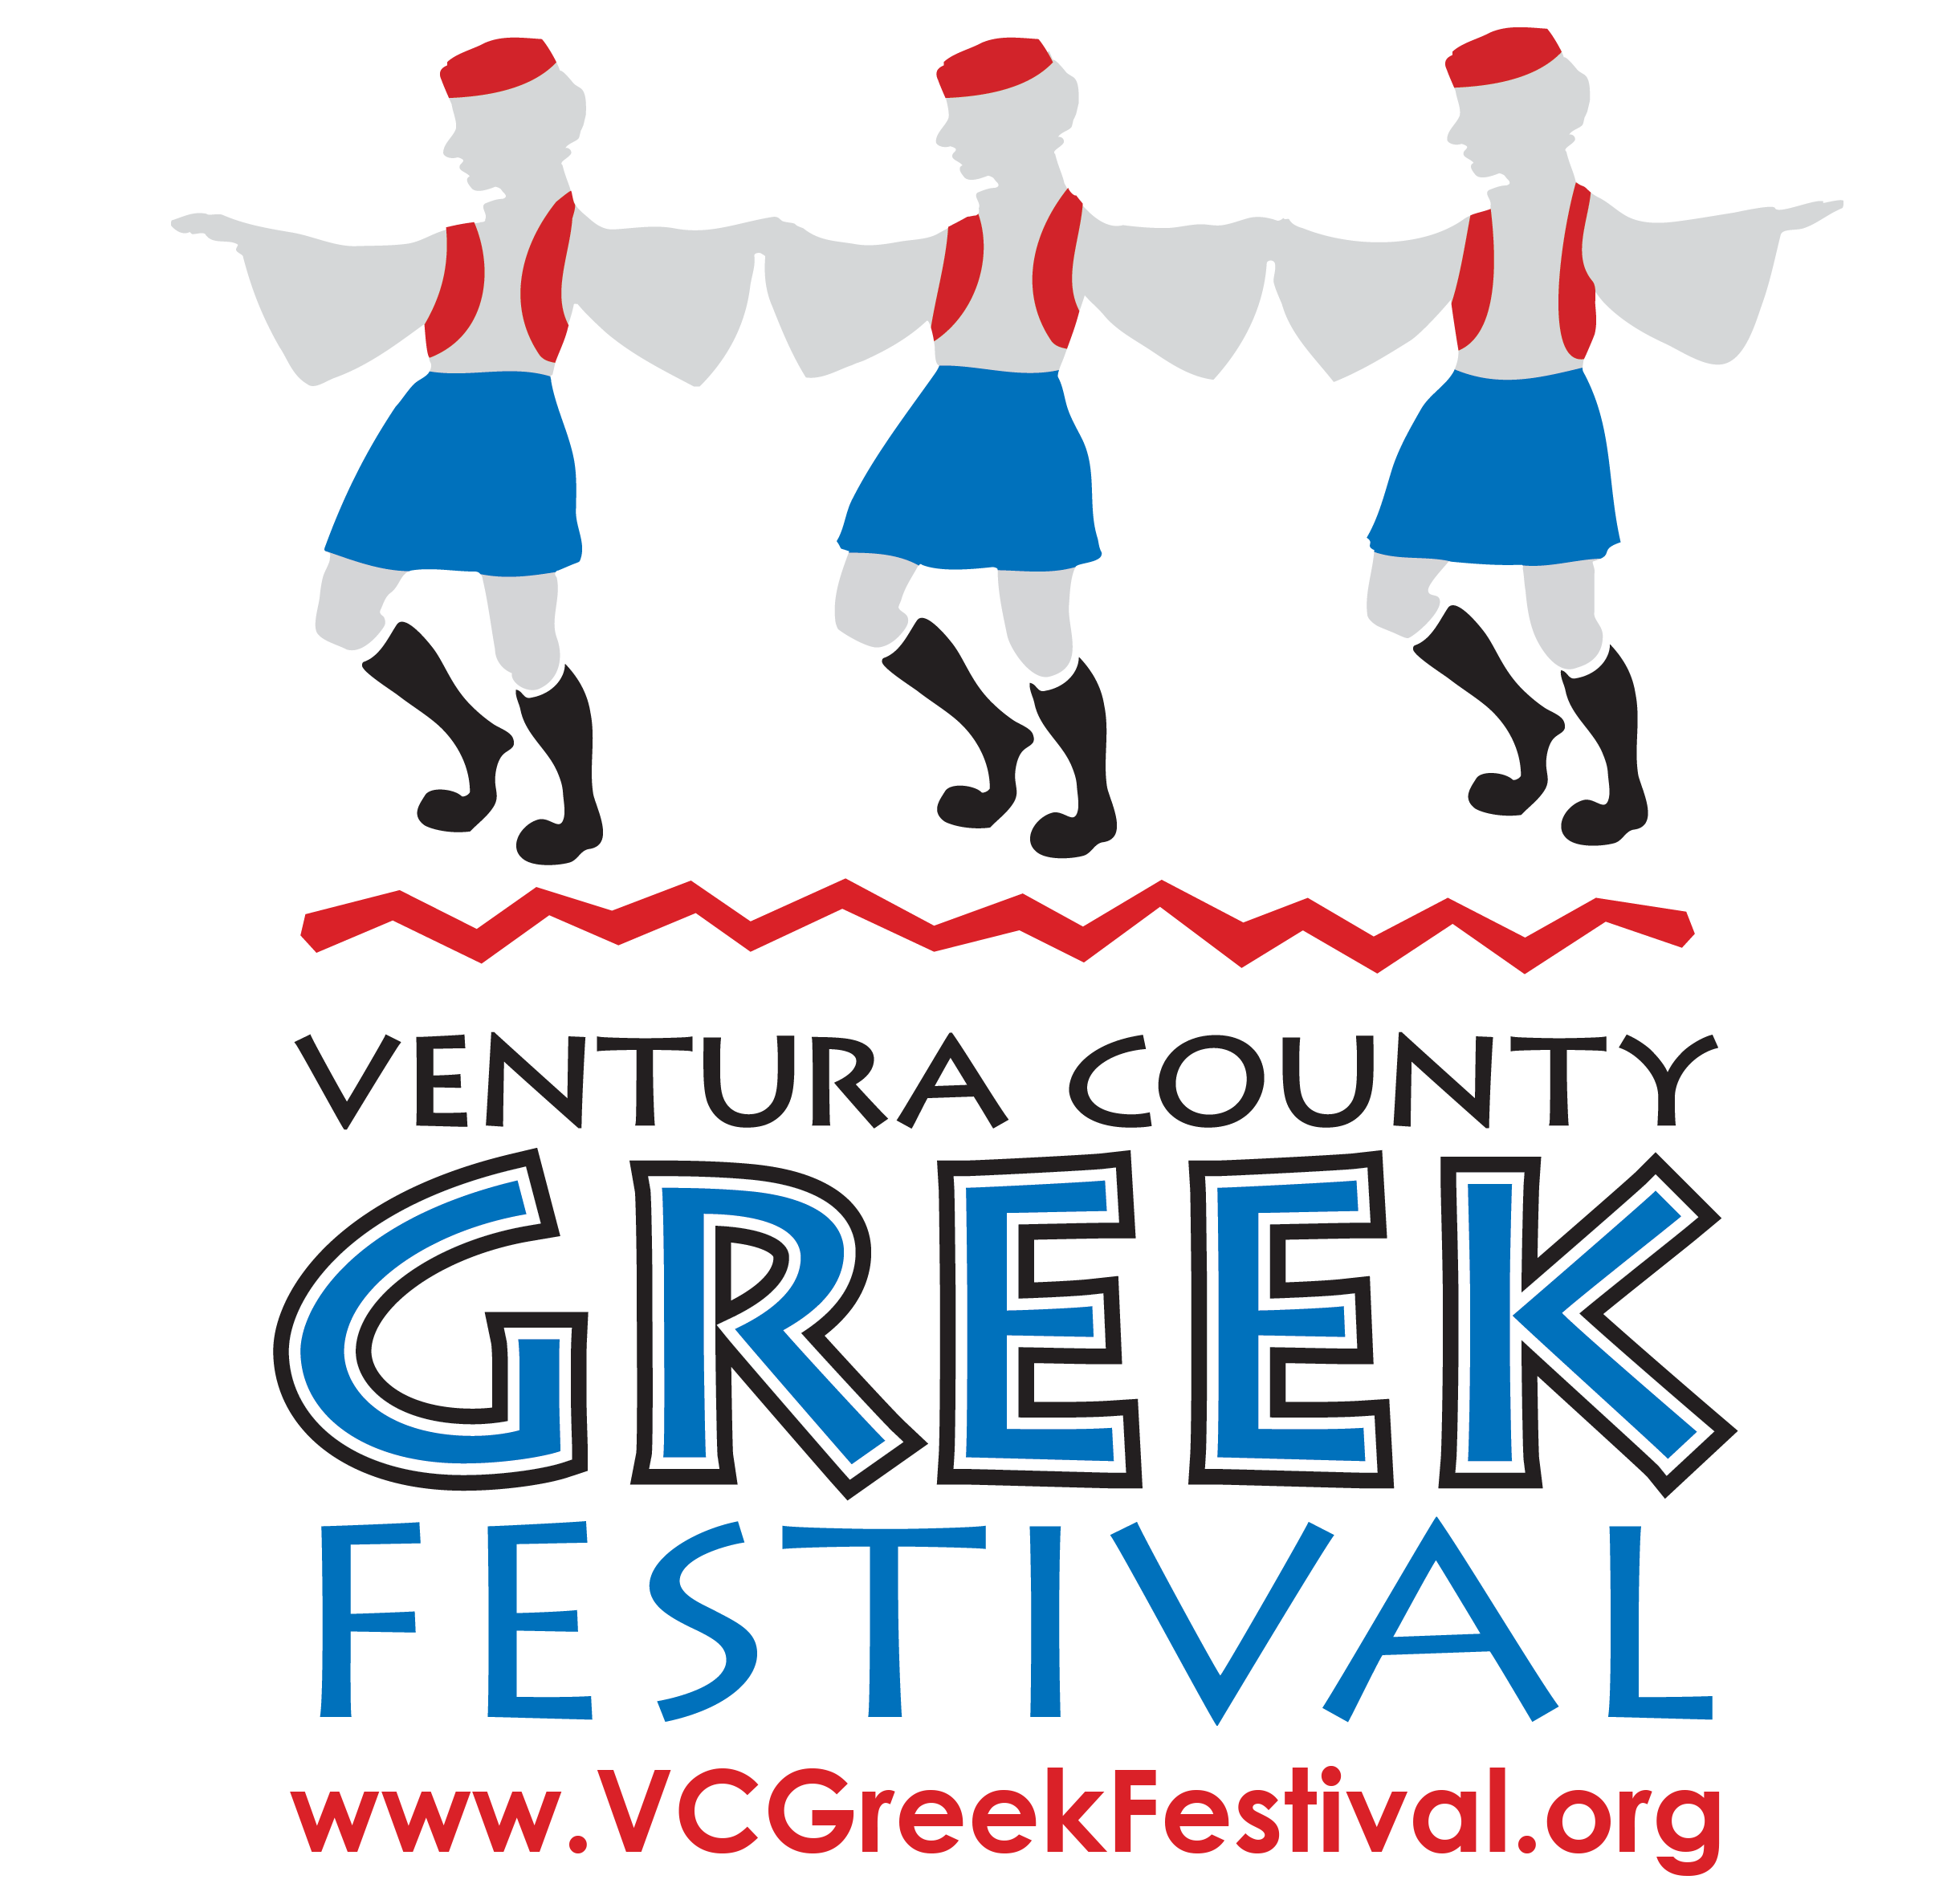 Ventura County Greek Festival